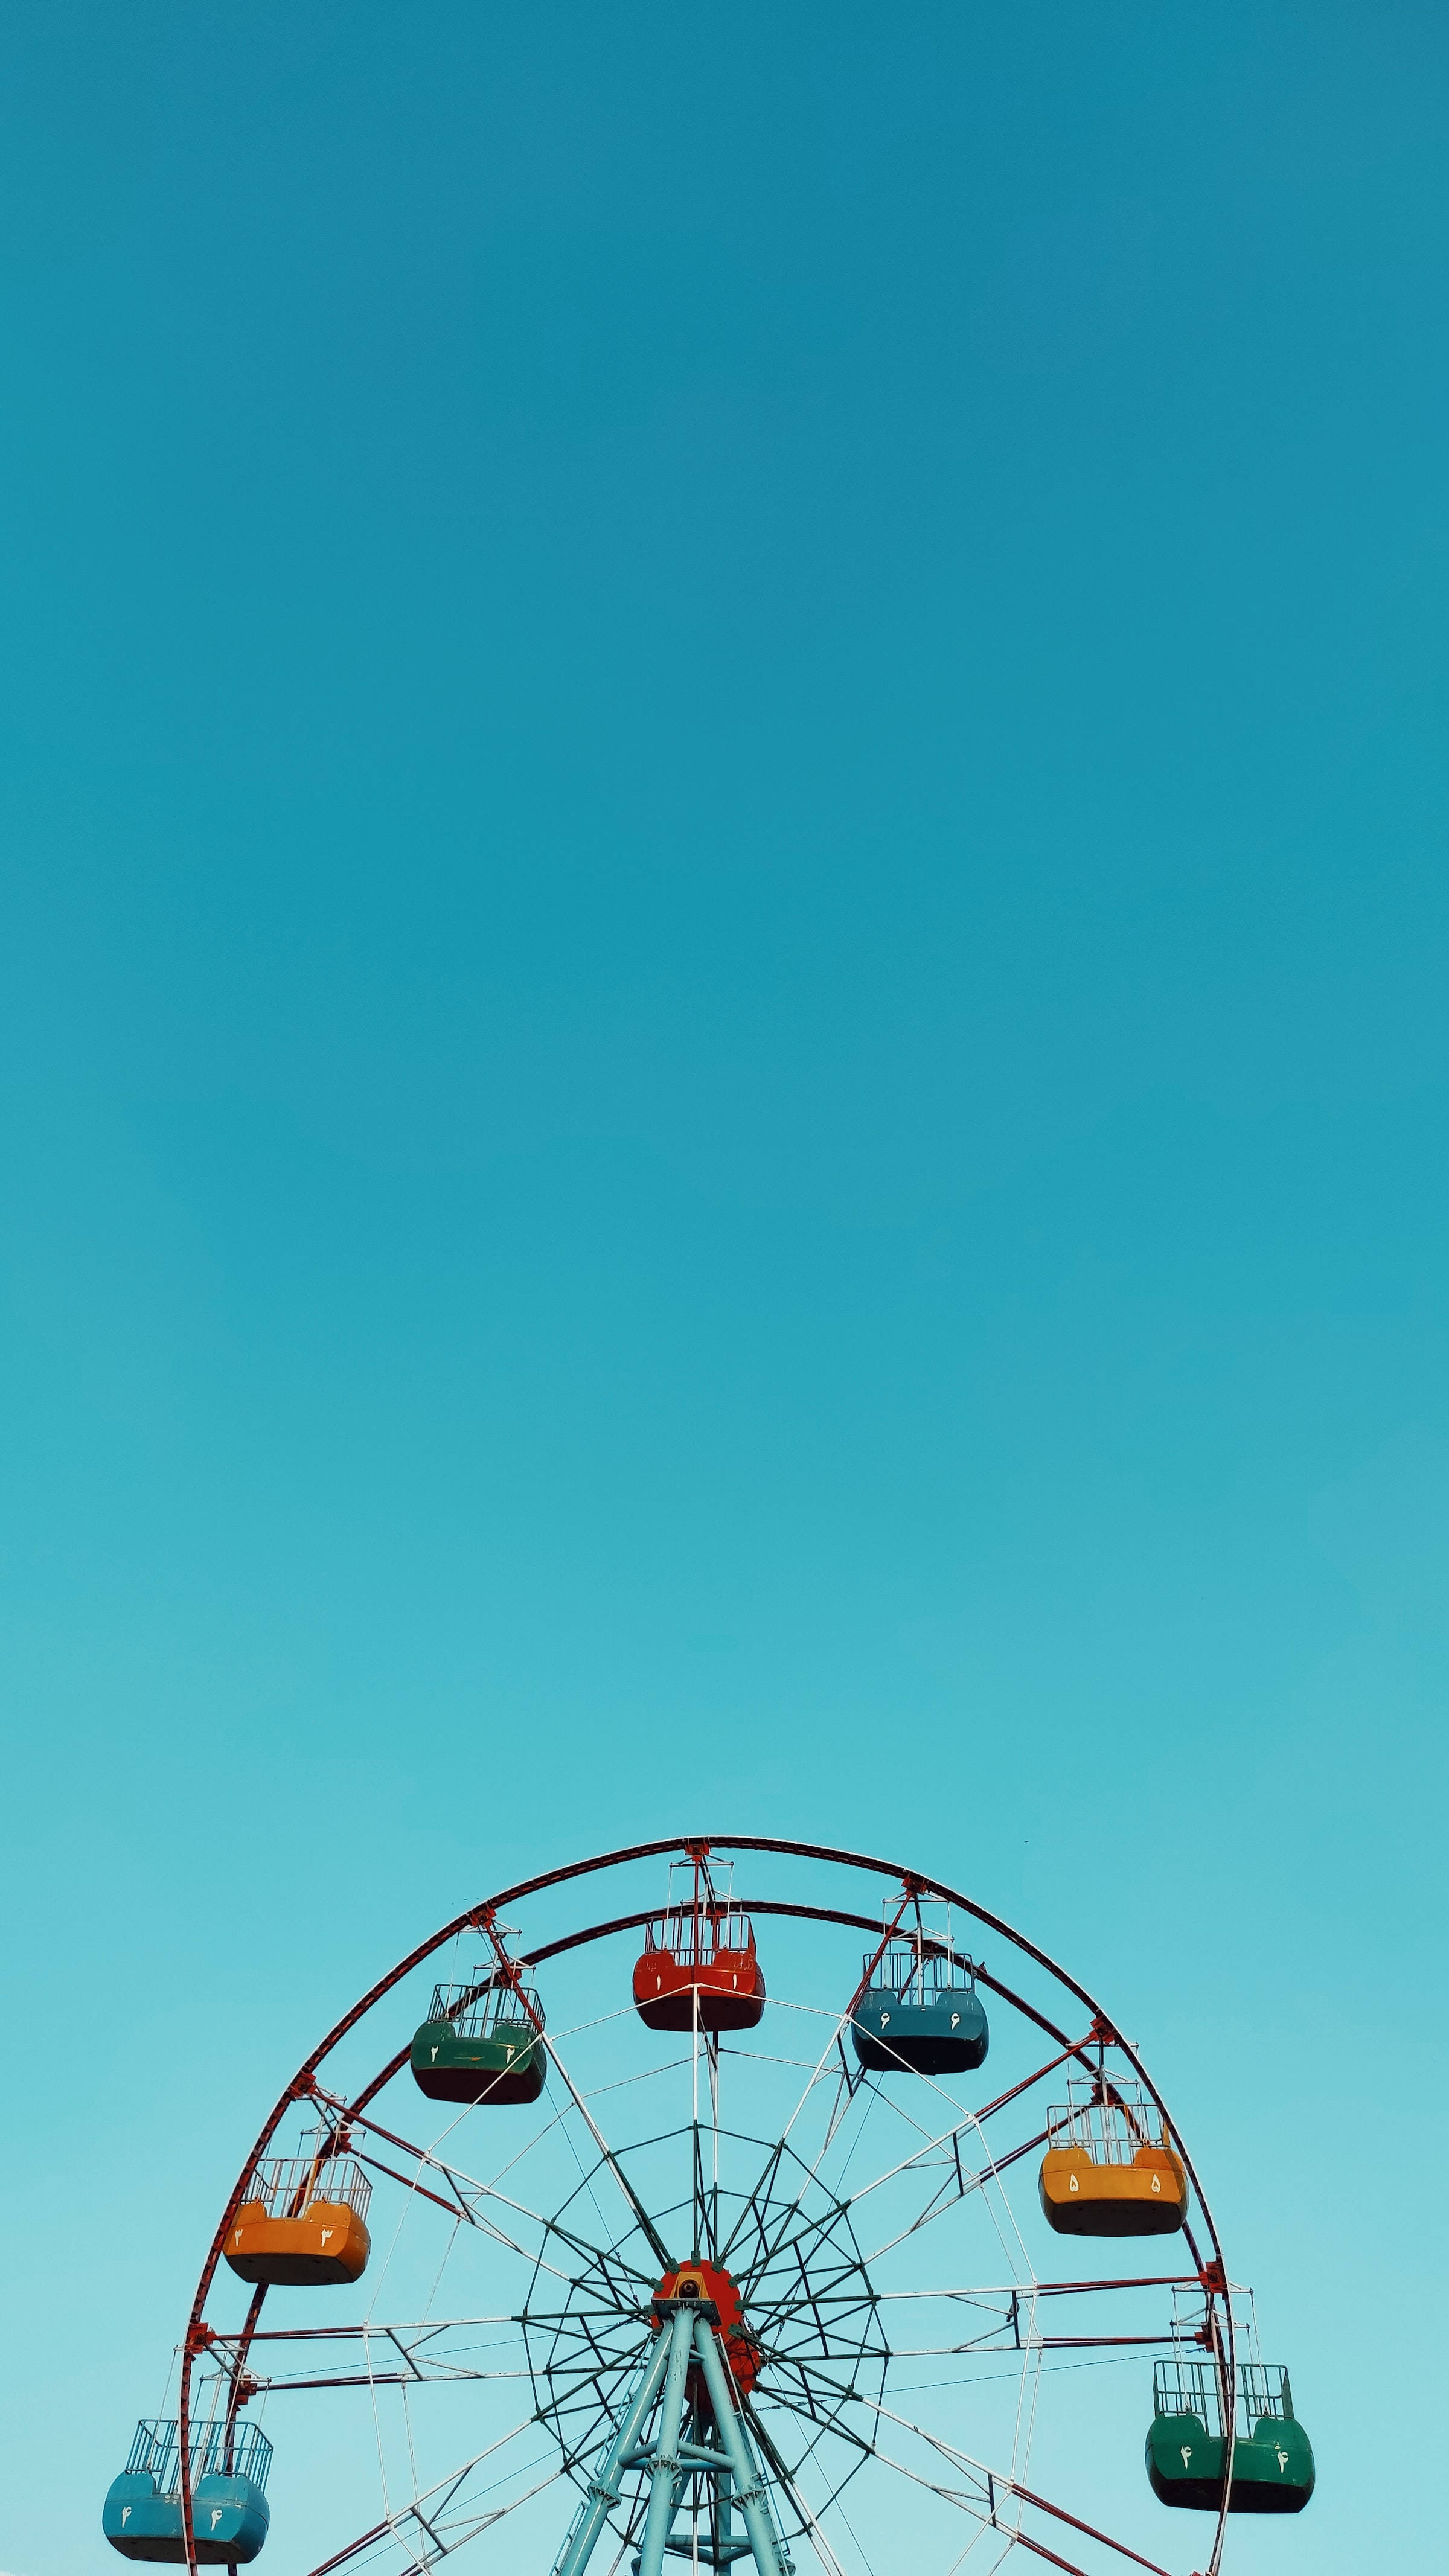 Caption: Whimsical Blue Ferris Wheel In Minimalist Style Background